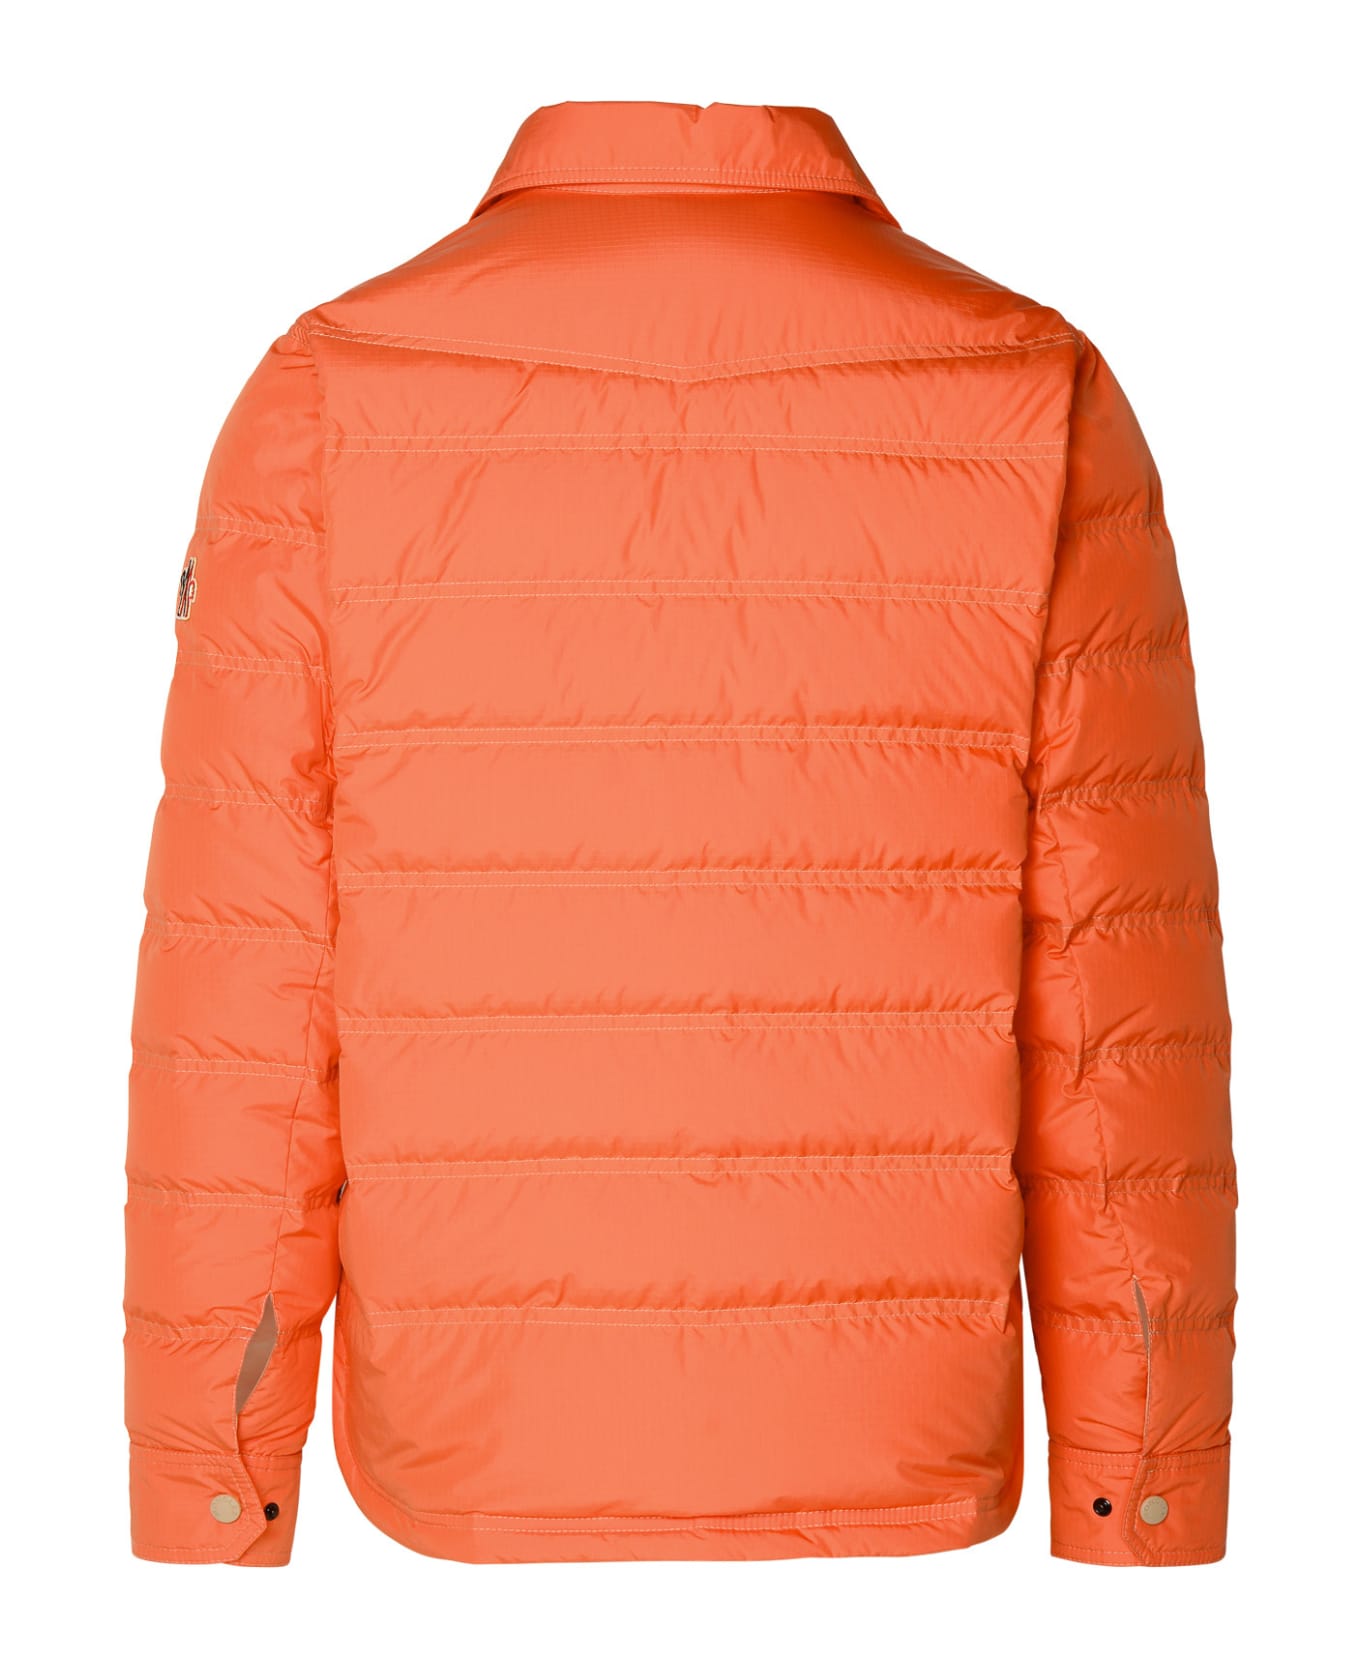 Moncler Grenoble 'lavachey' Orange Polyester Down Jacket - ORANGE